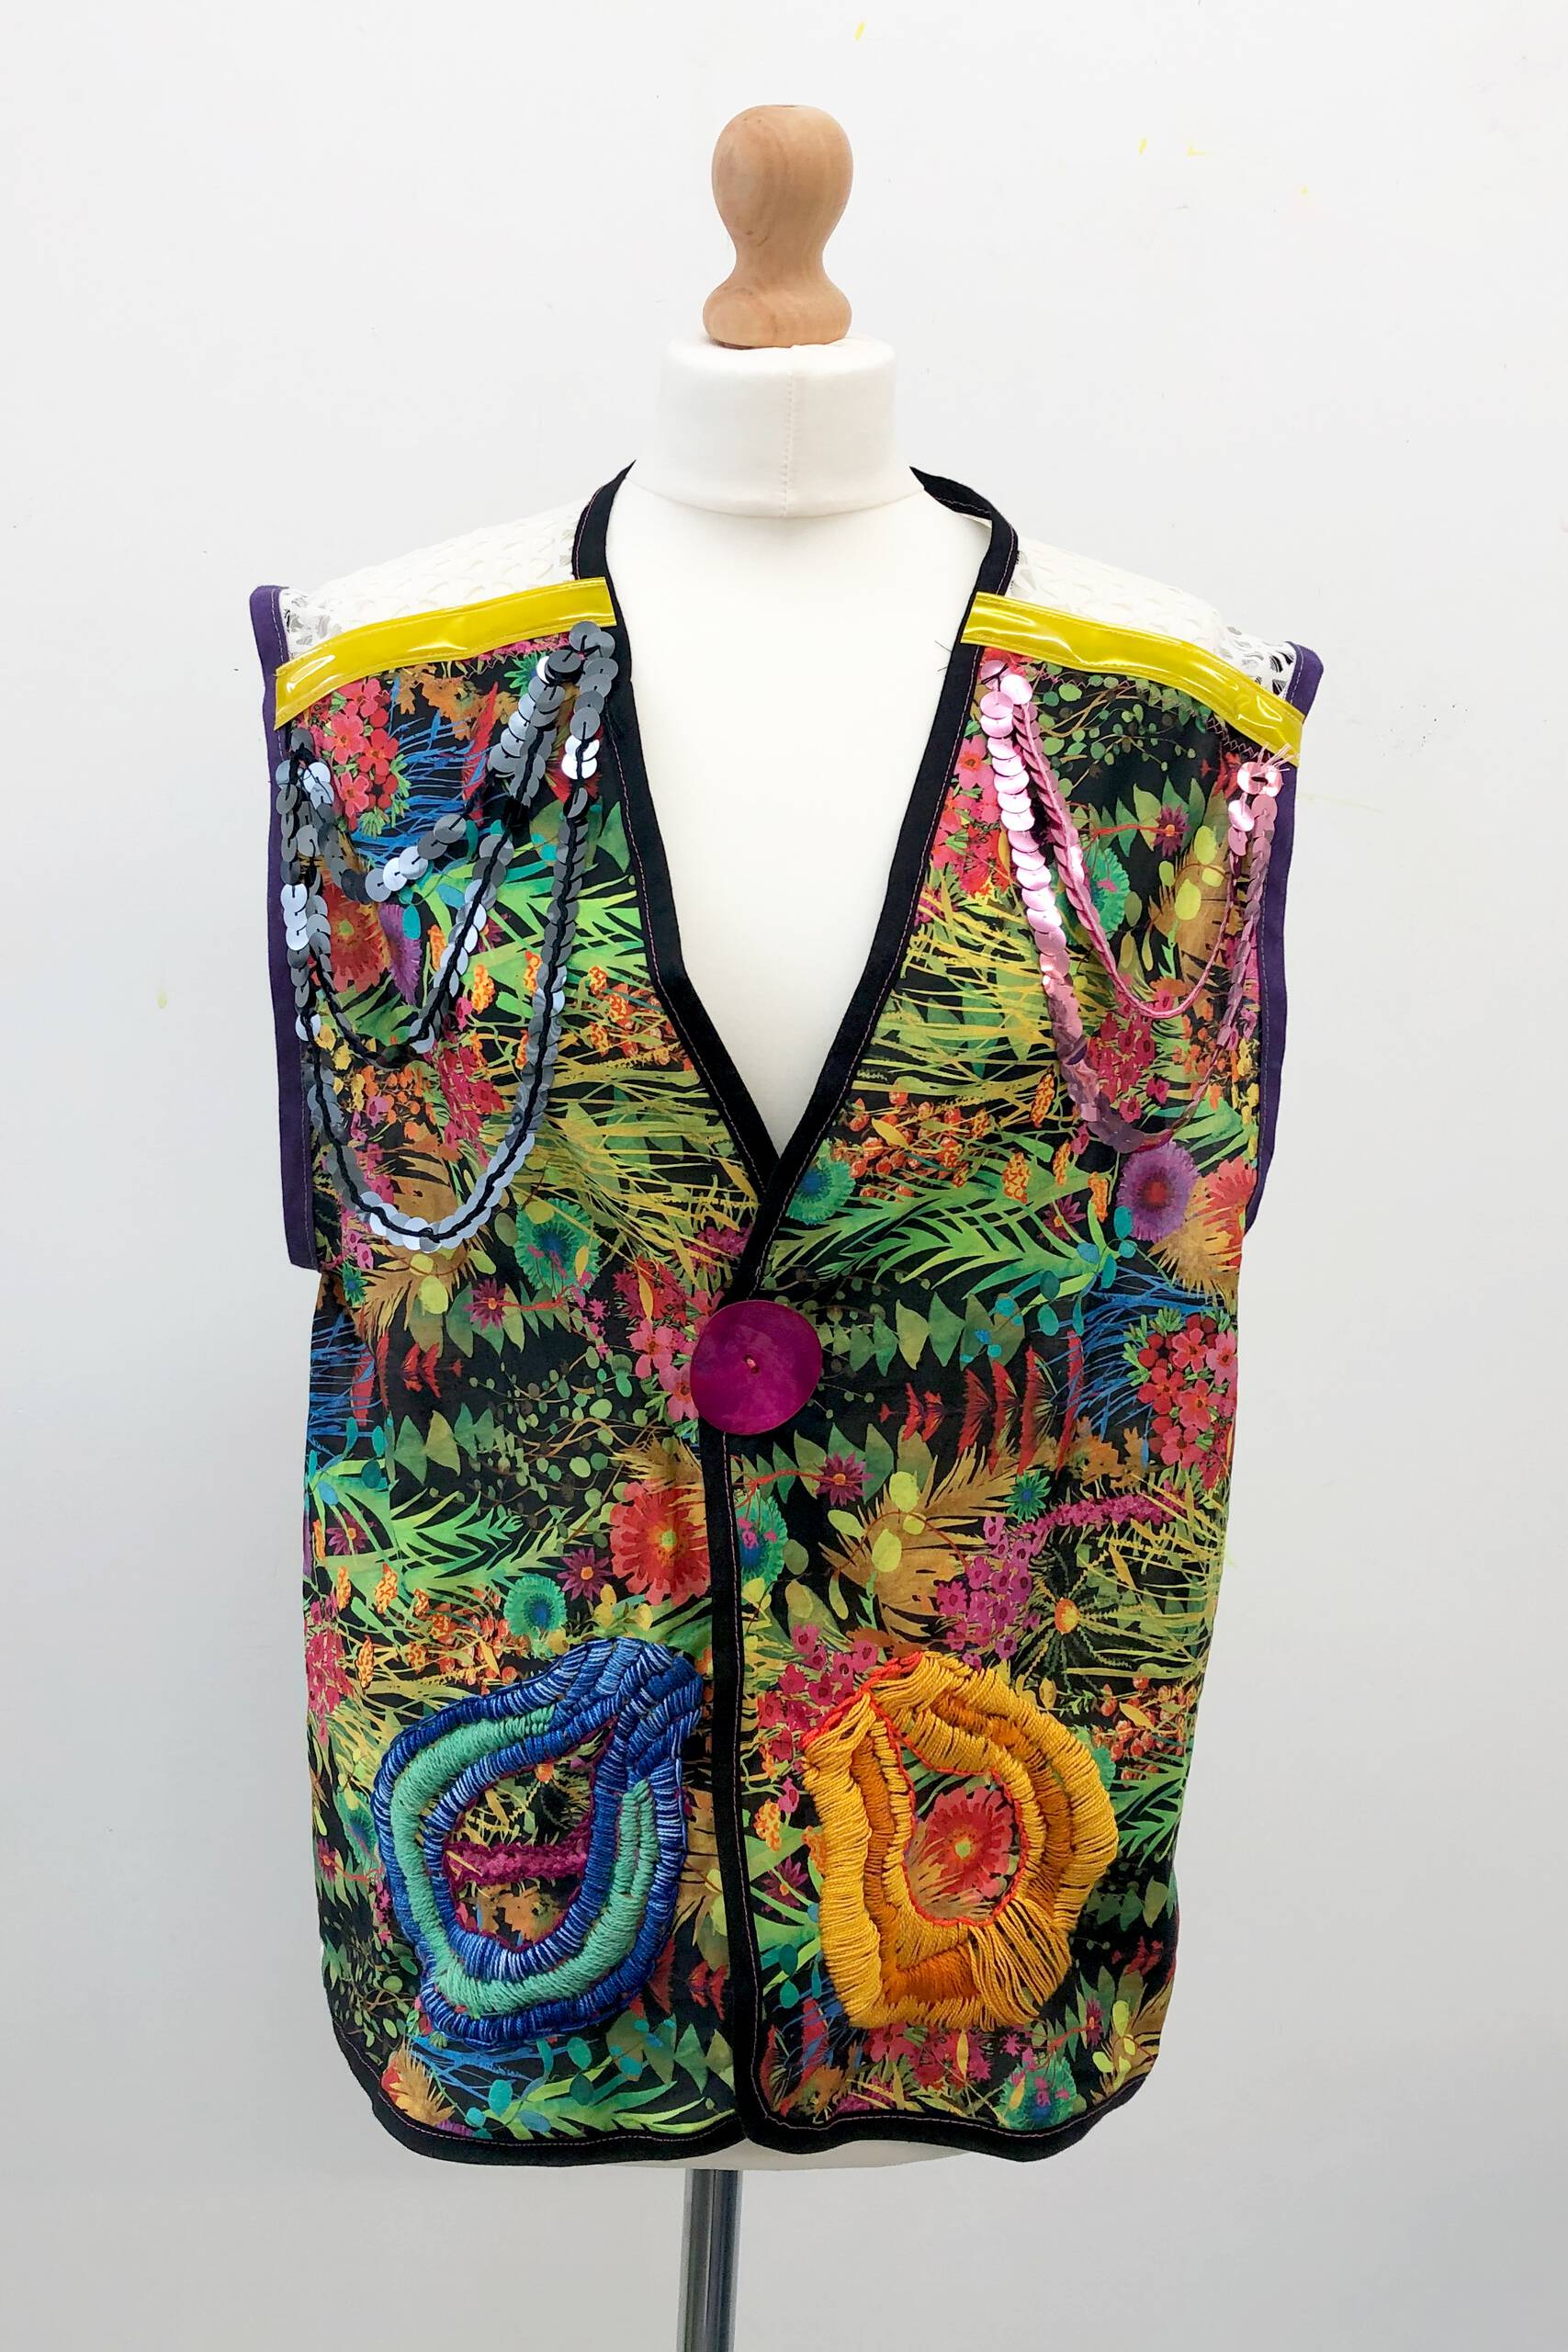 Fruits of Origin [papaya] (collaboration with Goia Mujalli), Fabric, acrylic paint, hand-embroidery on hand-sewn garment, 2019